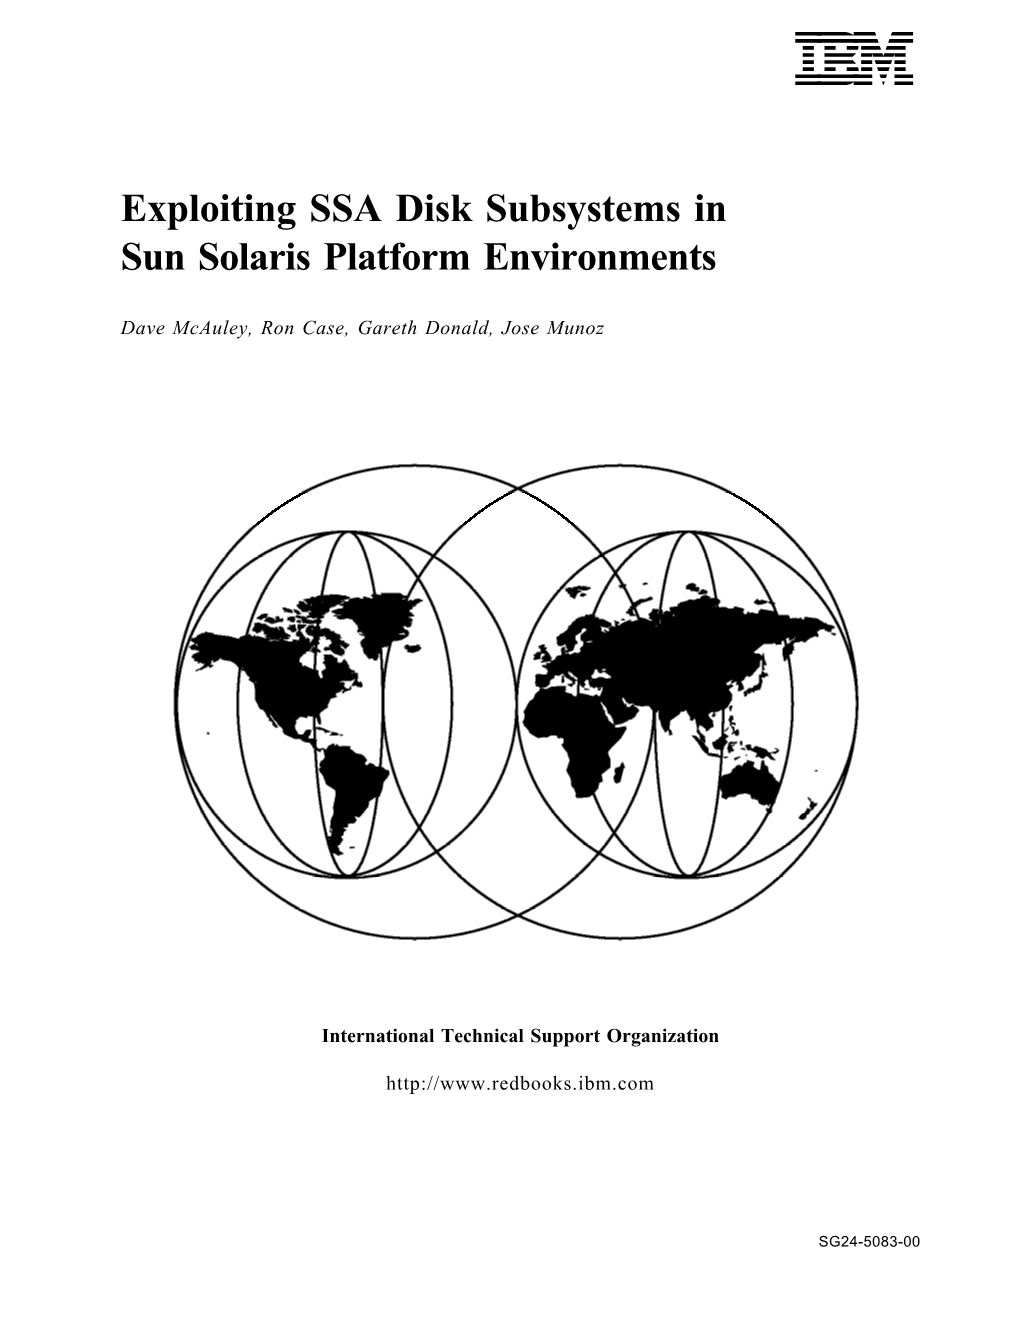 Exploiting SSA Disk Subsystems in Sun Solaris Platform Environments